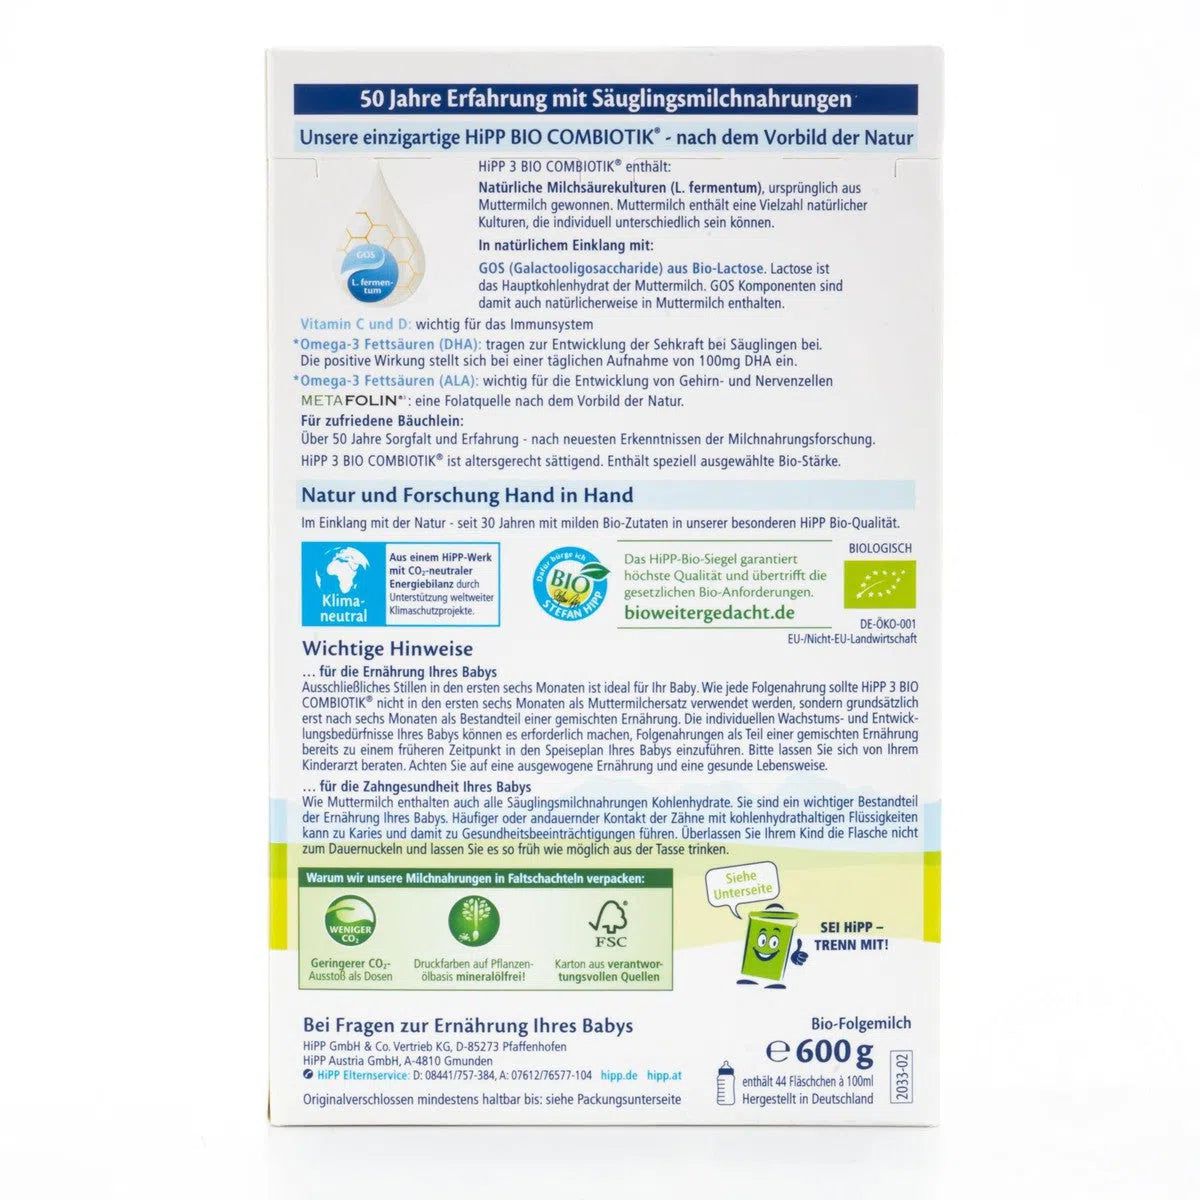 HiPP Combiotic Infant Starter Kit PRE, Free & Fast Shipping, Certified  German Wholesaler, Safest and Healthiest Formula